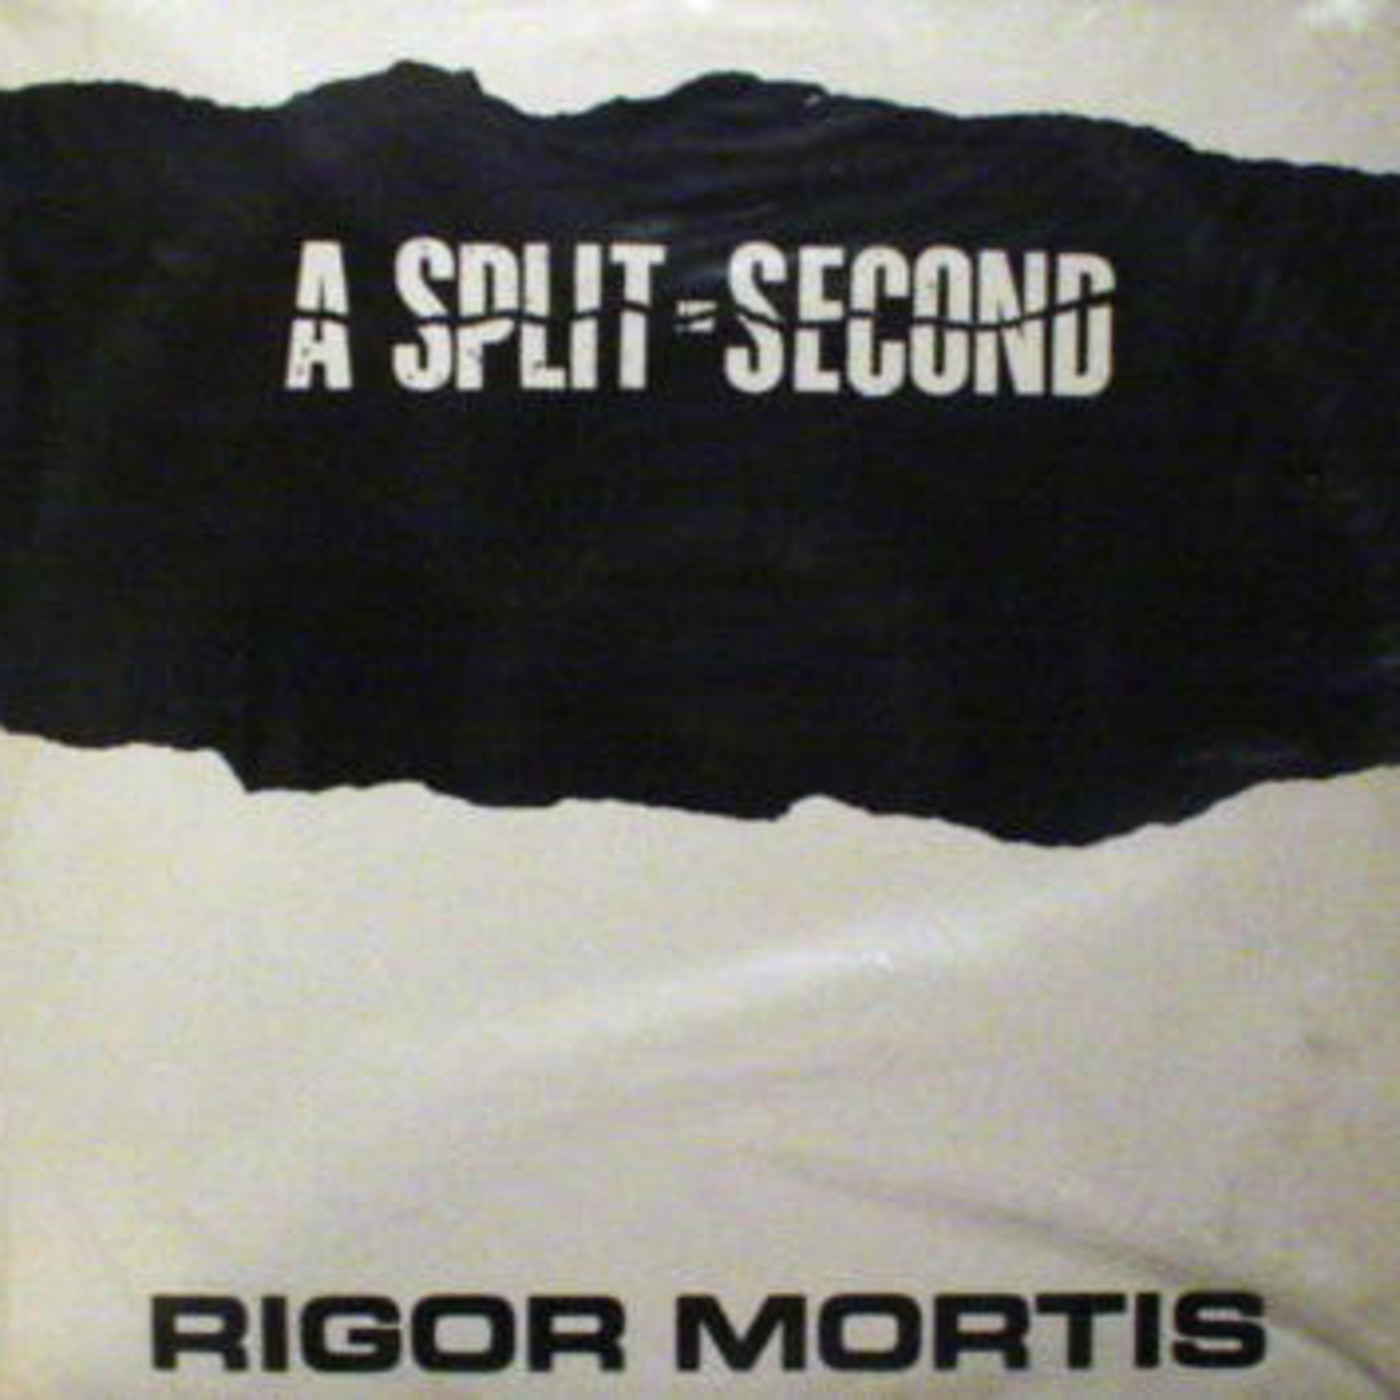 split second 1987